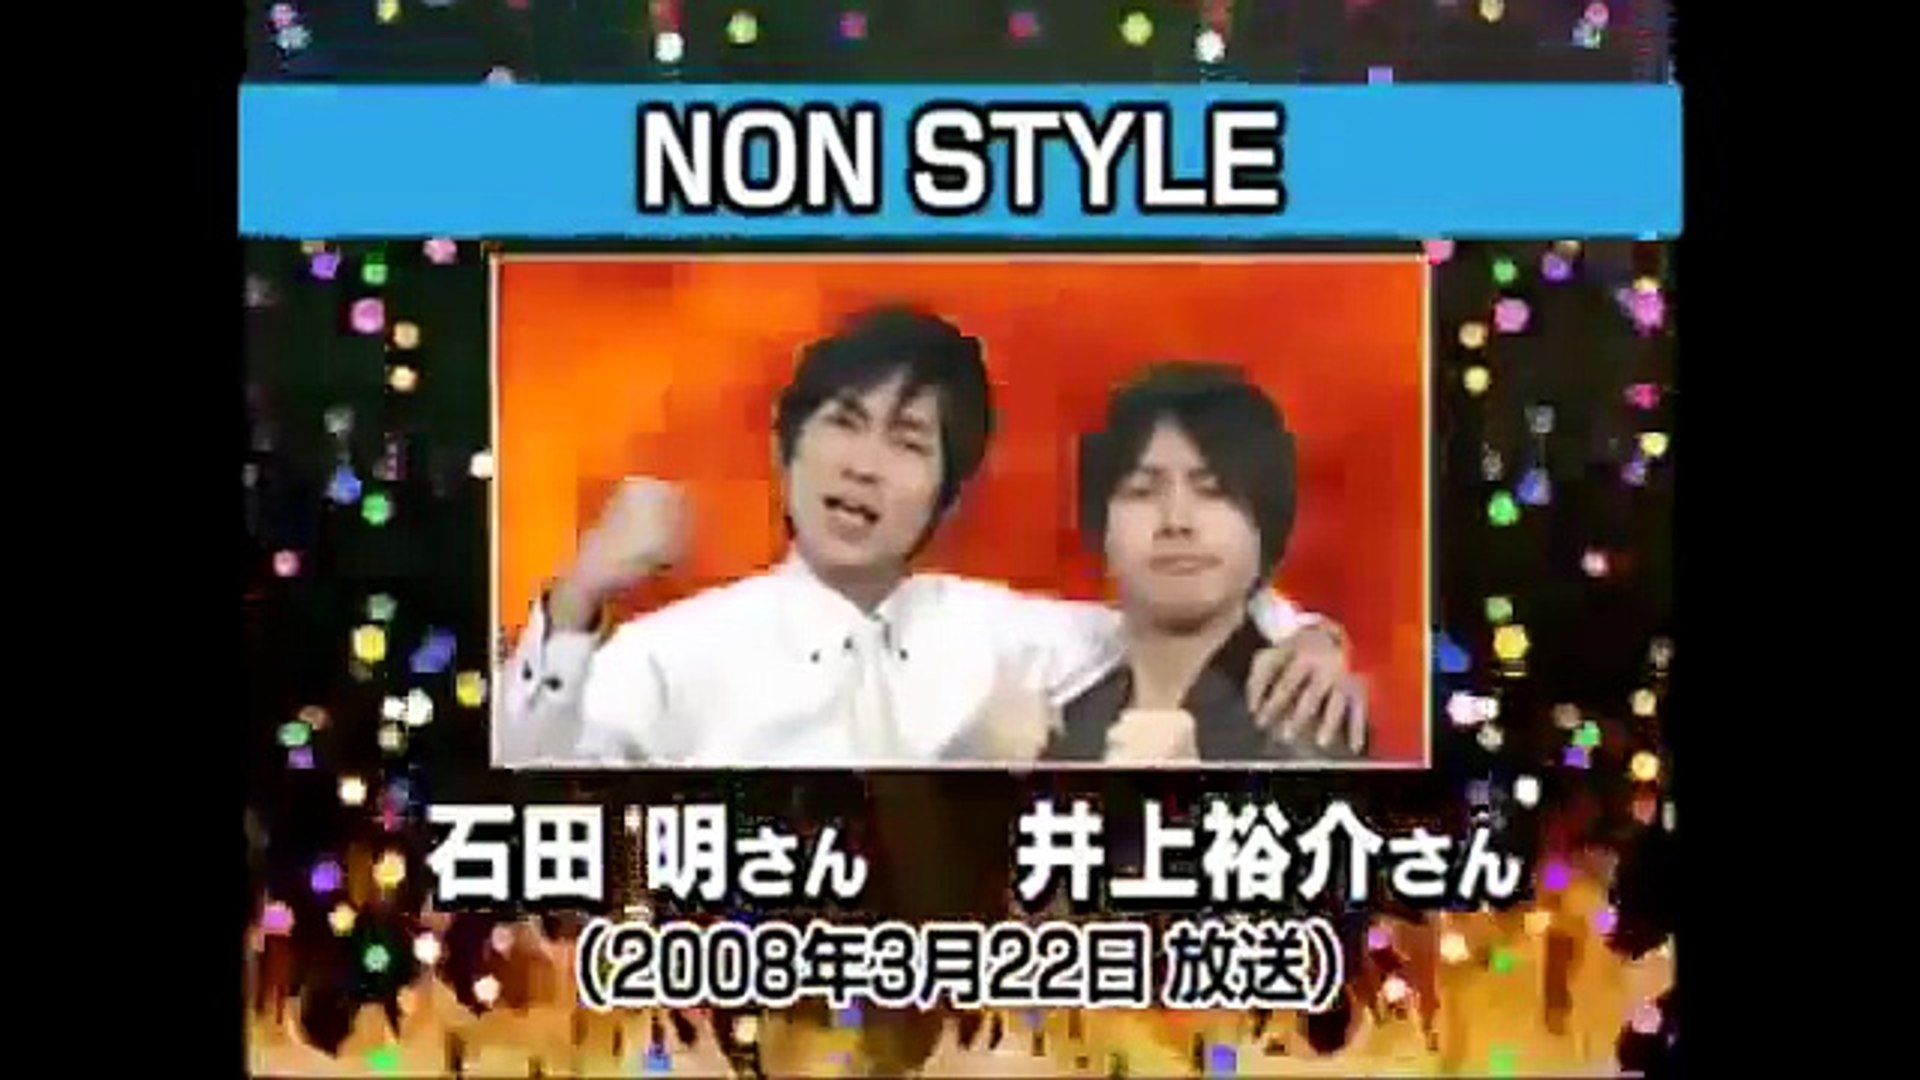 NON STYLE/爆笑オンエアバトル DVD クリアファイル付